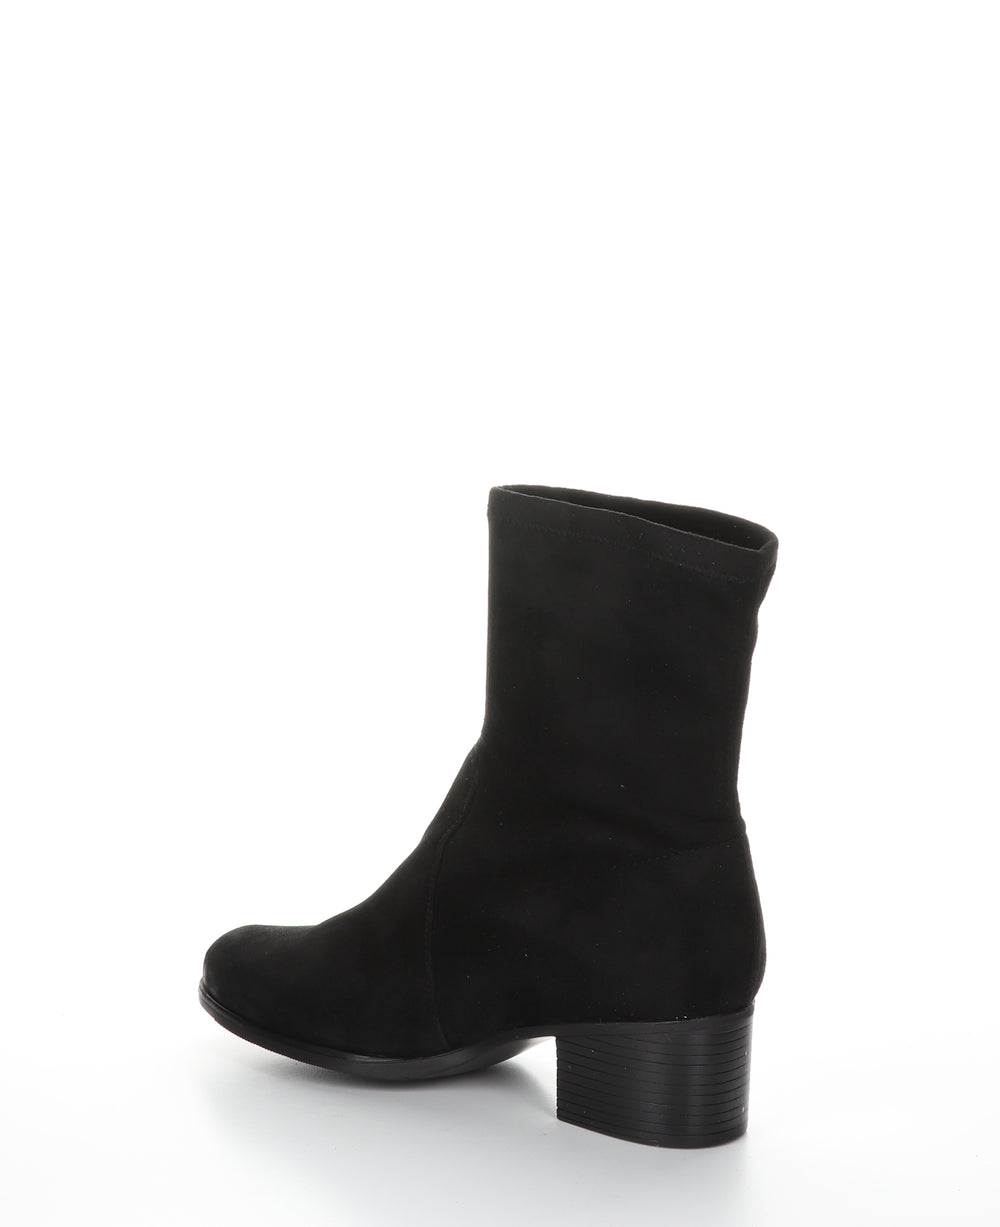 RETAIN Black Round Toe Boots|RETAIN Bottes à Bout Rond in Noir